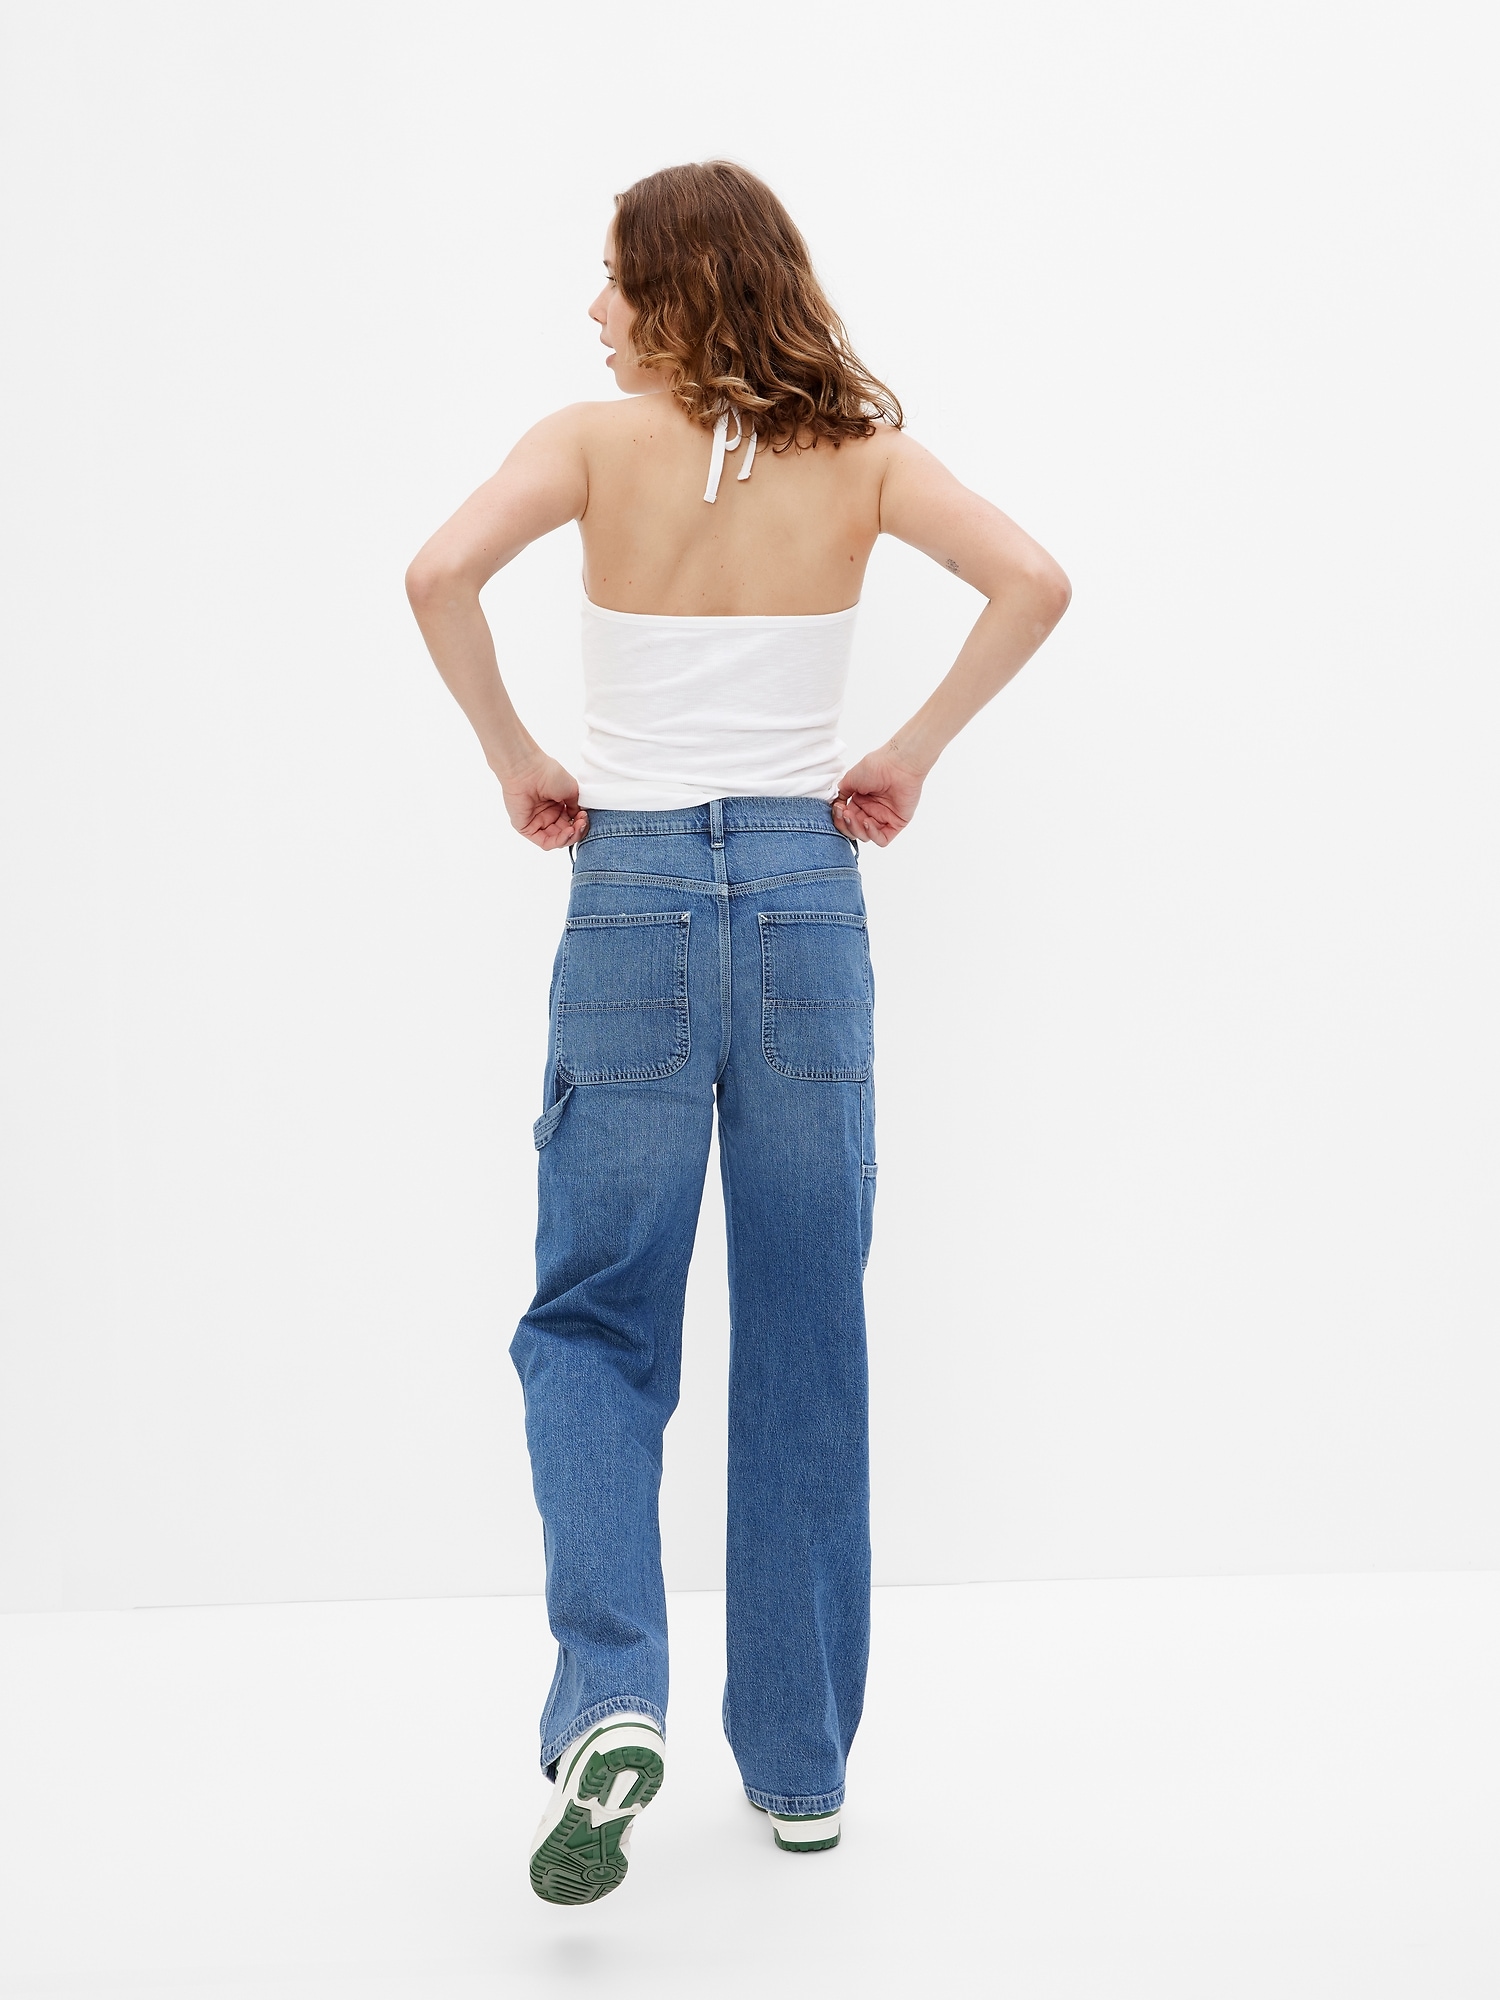 Carpenter jeans - Women's fashion